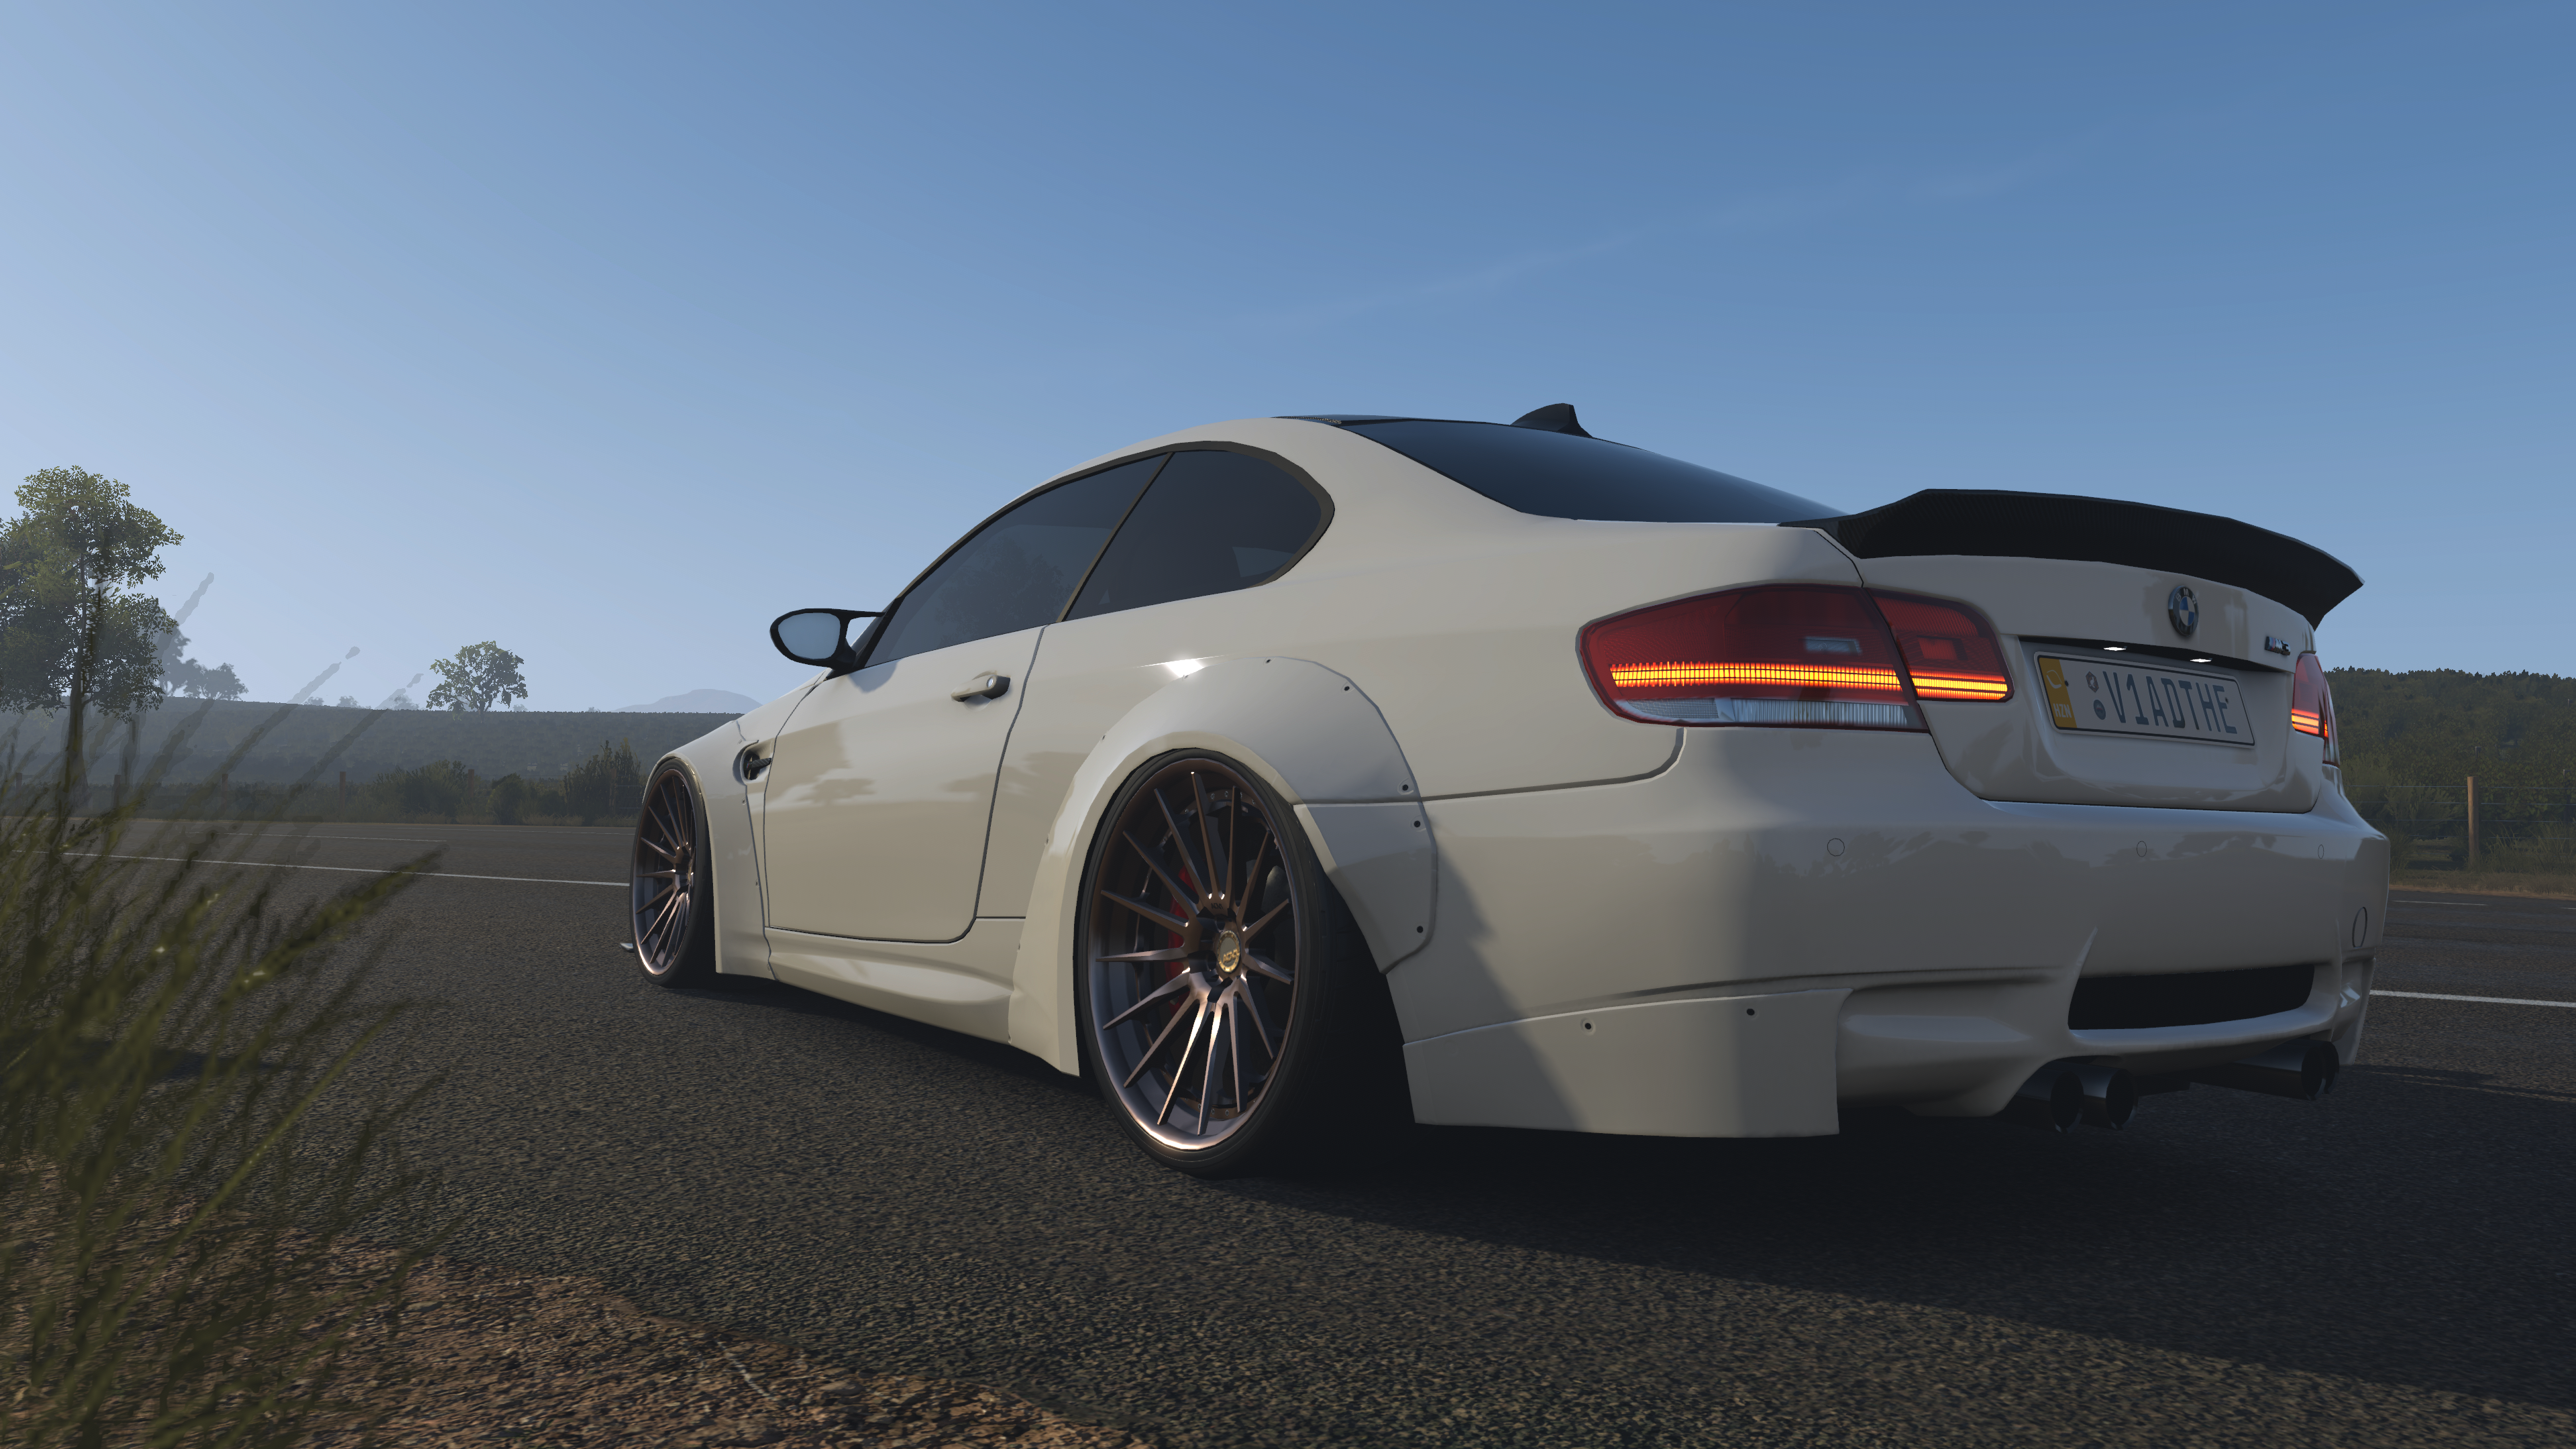 General 3840x2160 car Forza Forza Horizon 3 Turn 10 Studios vehicle racing video games BMW white cars